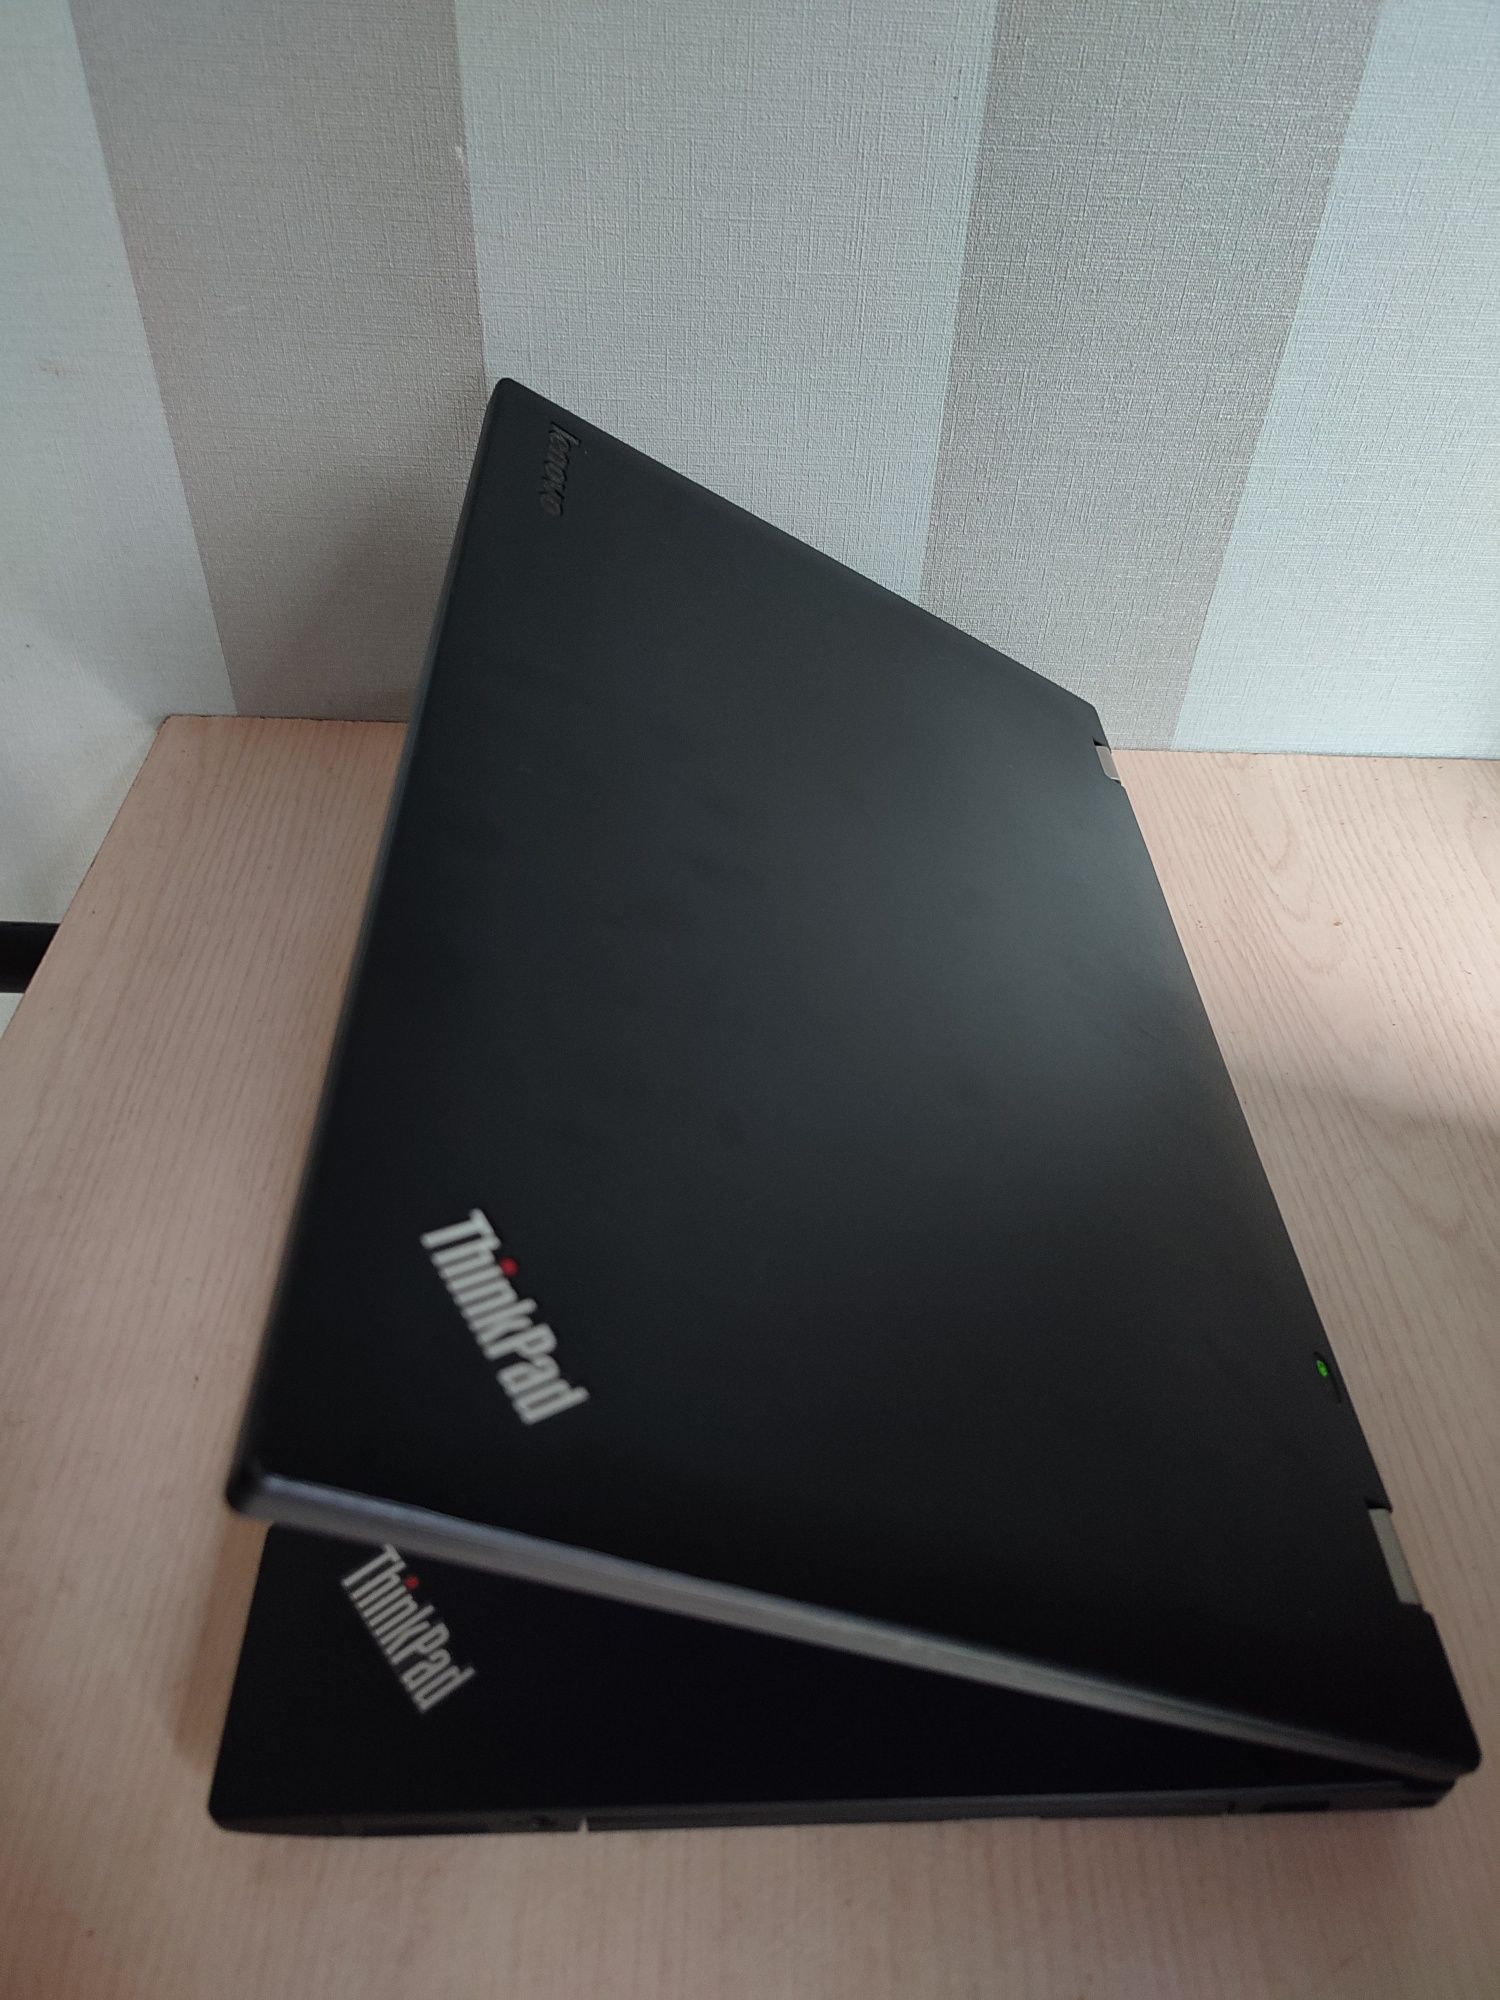 Ноутбук Lenovo L530 i3-3120m/DDR3 8gb/SSD 128gb/Бат 3-4год.